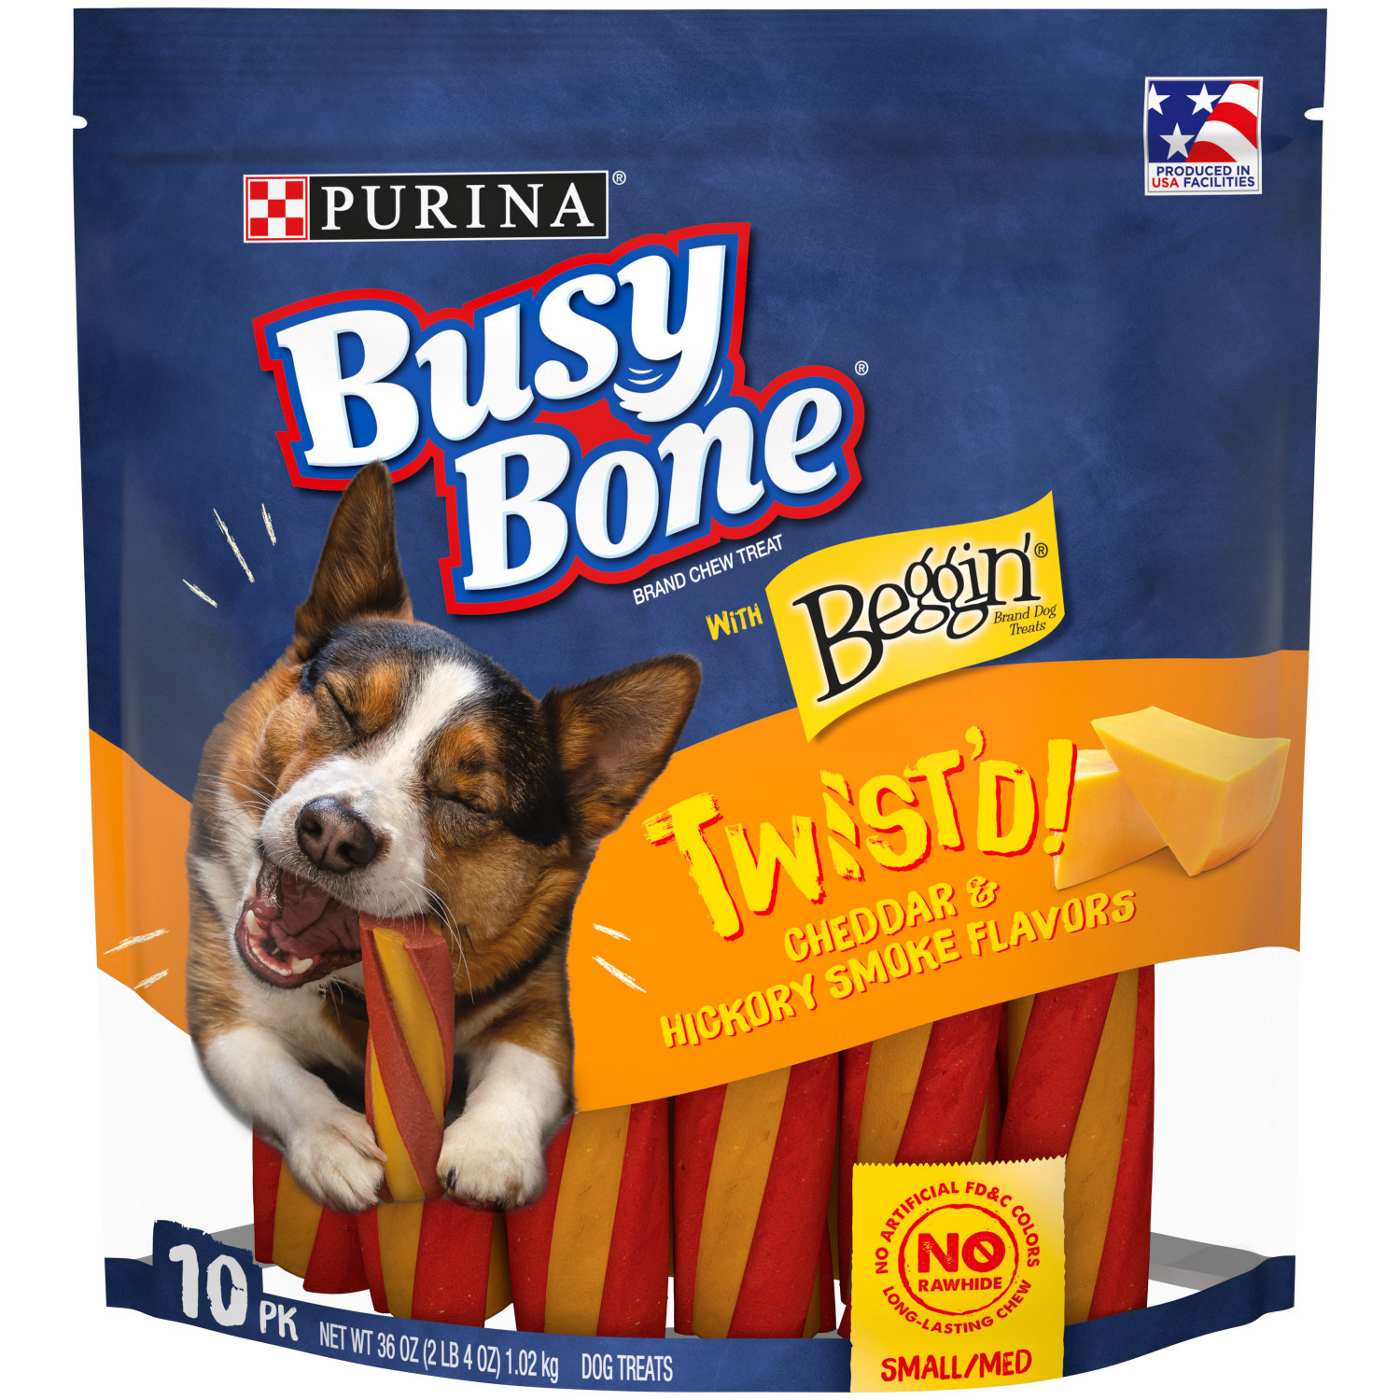 Busy Bone Beggin' Twist'd Cheddar & Hickory Smoke Flavor Small & Medium Dog Treats; image 1 of 6